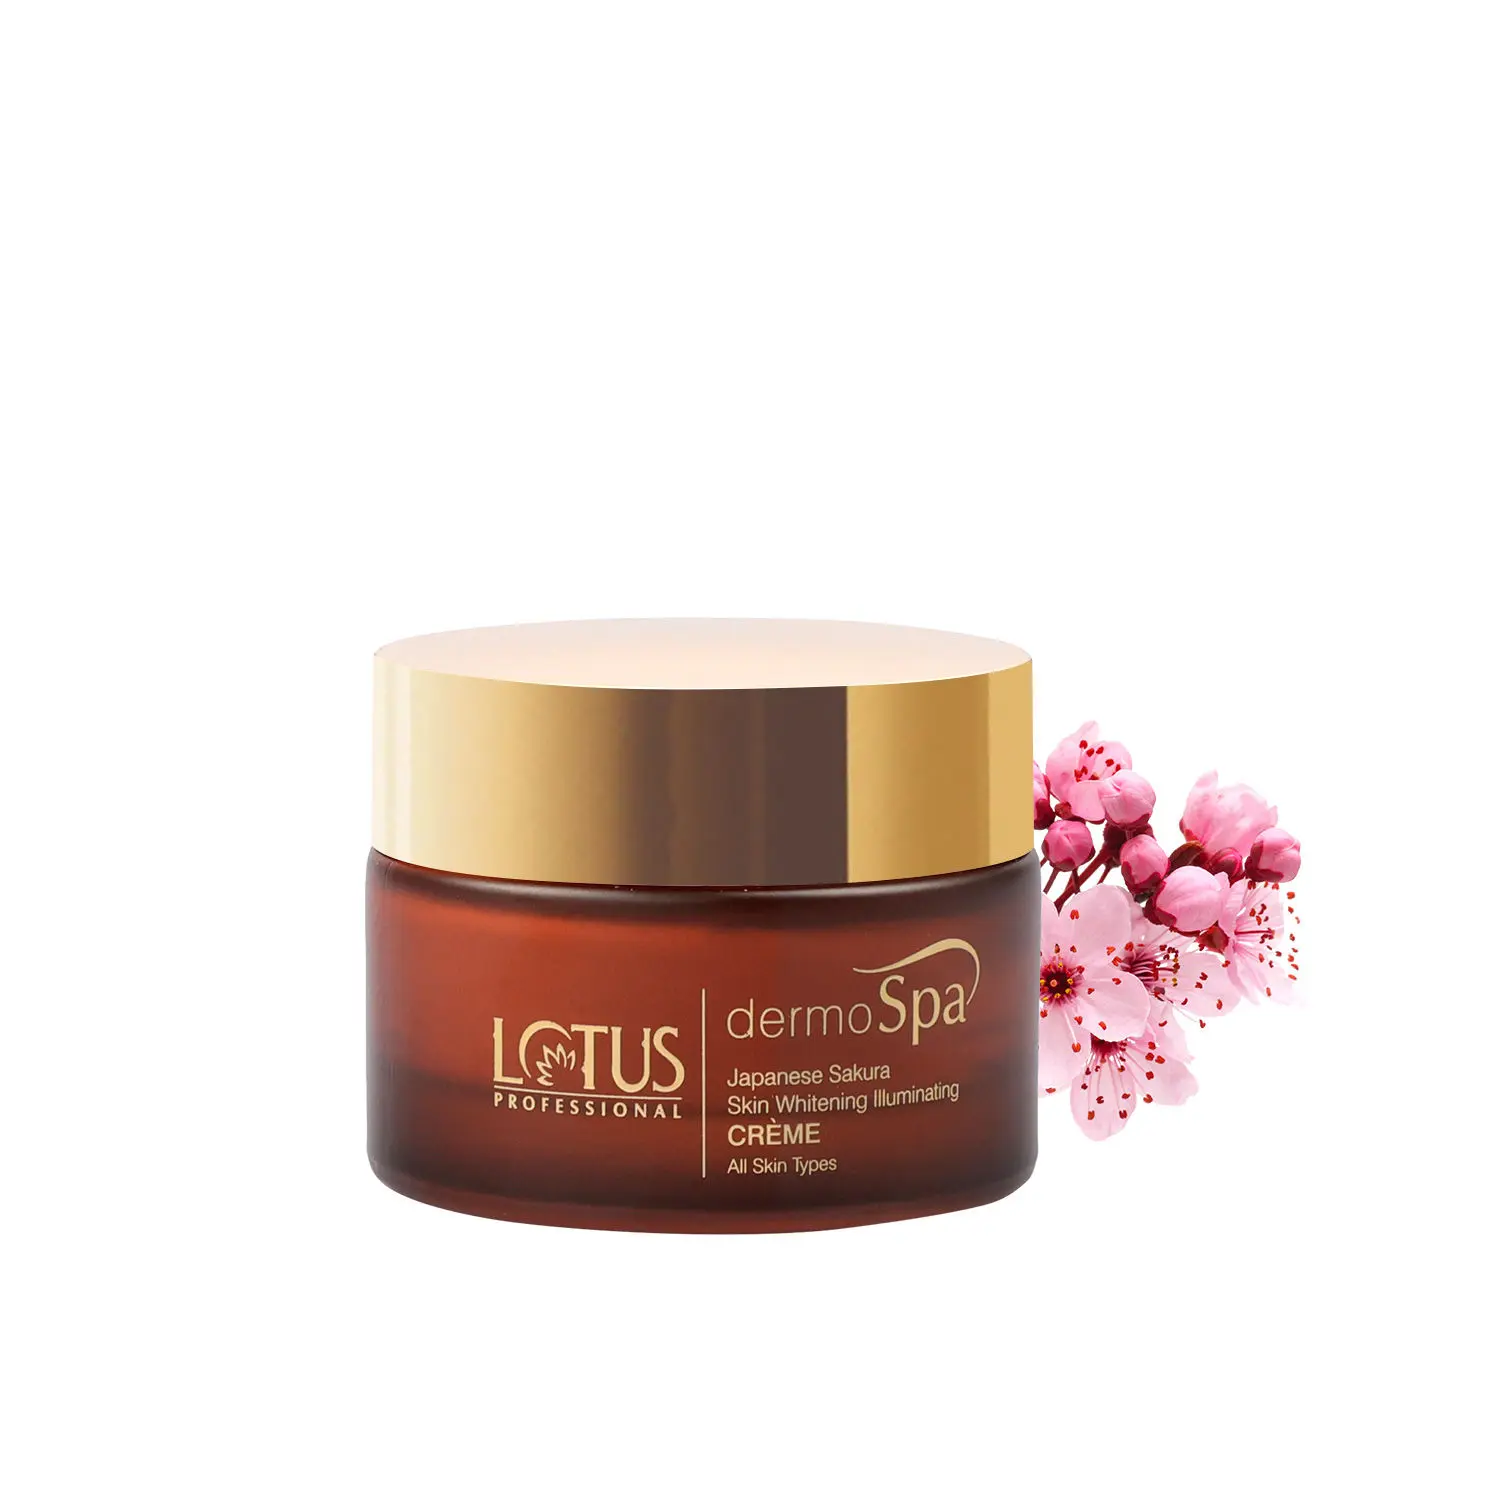 Lotus Professional DermoSpa Japanese Sakura Skin Whitening & Illuminating Day Cream | SPF 20 | Preservative Free | 50g